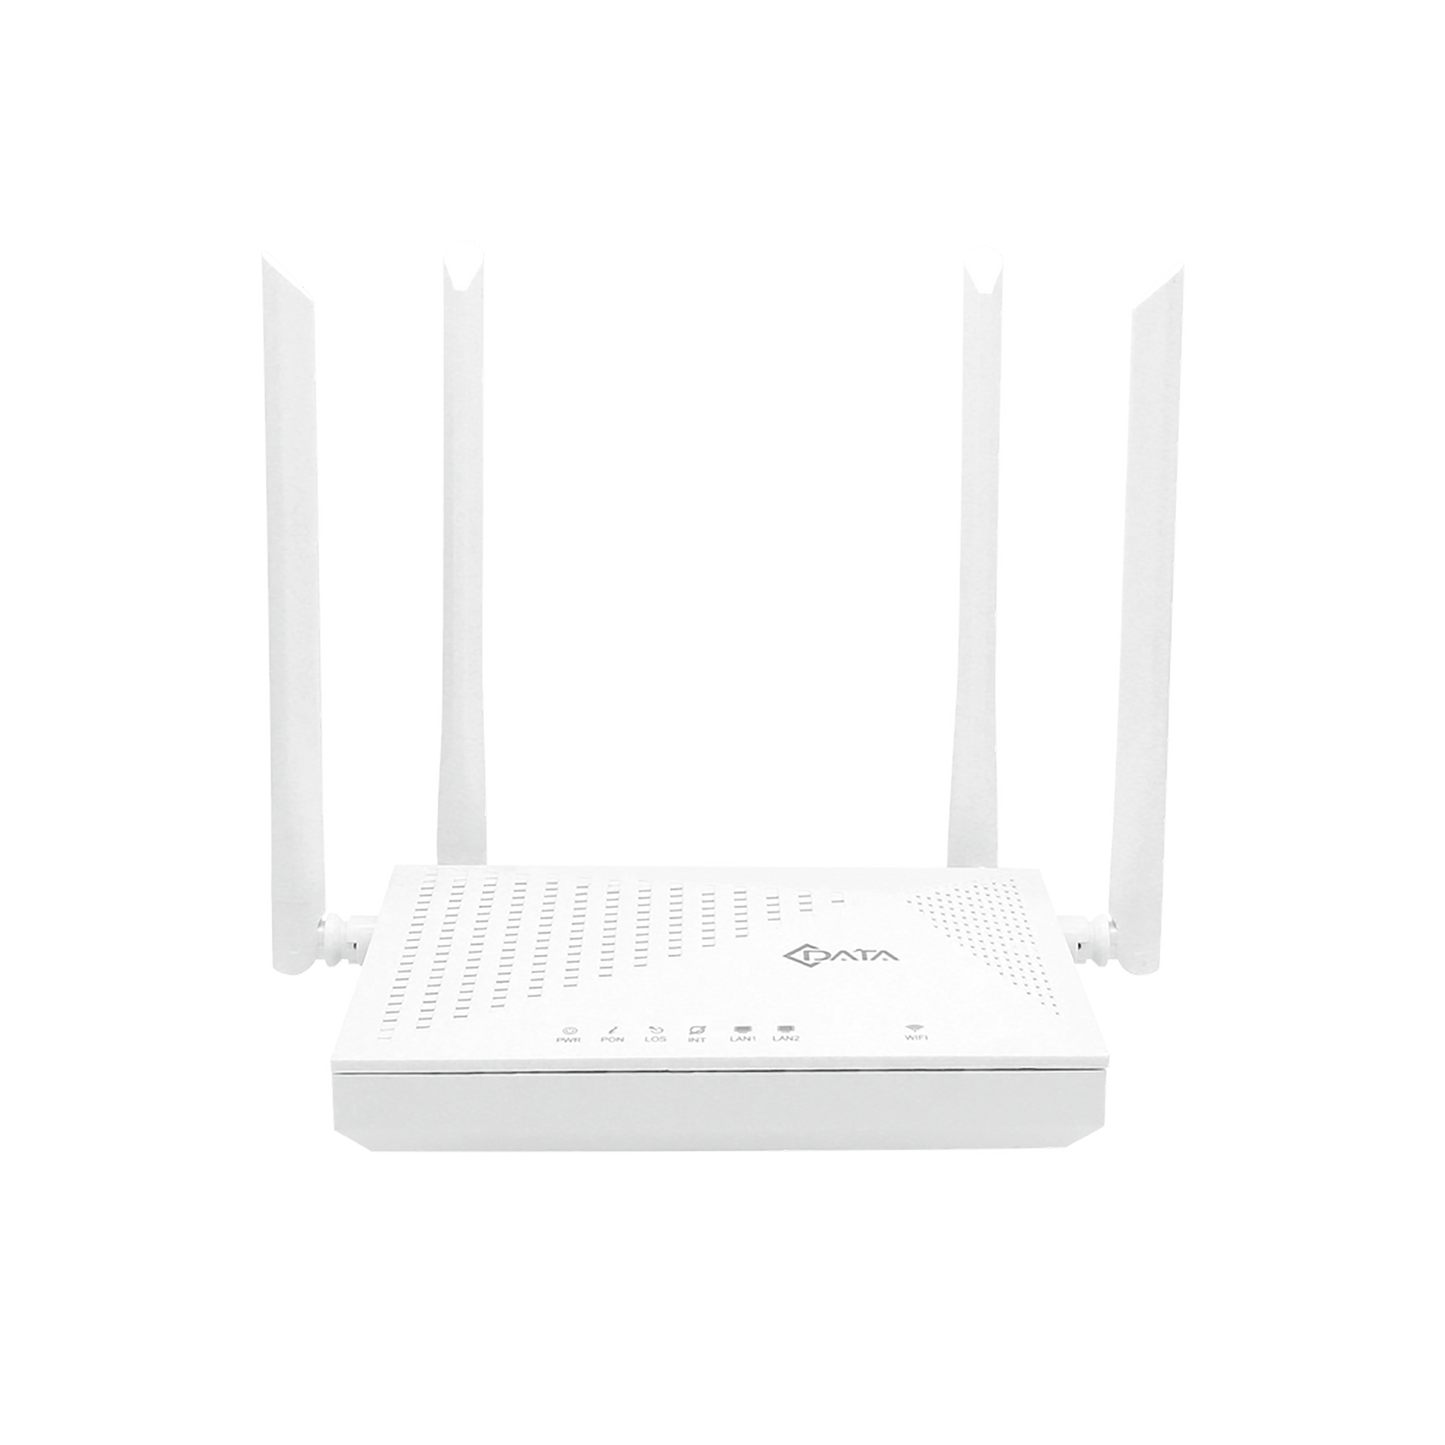 EPON/GPON ONU WIFI 2.4G/5G 802.11 a/b/g/n/ac, 2 Ethernet ports 10/100/1000, GPON: Up to 2.488Gbps/1.244Gbps.